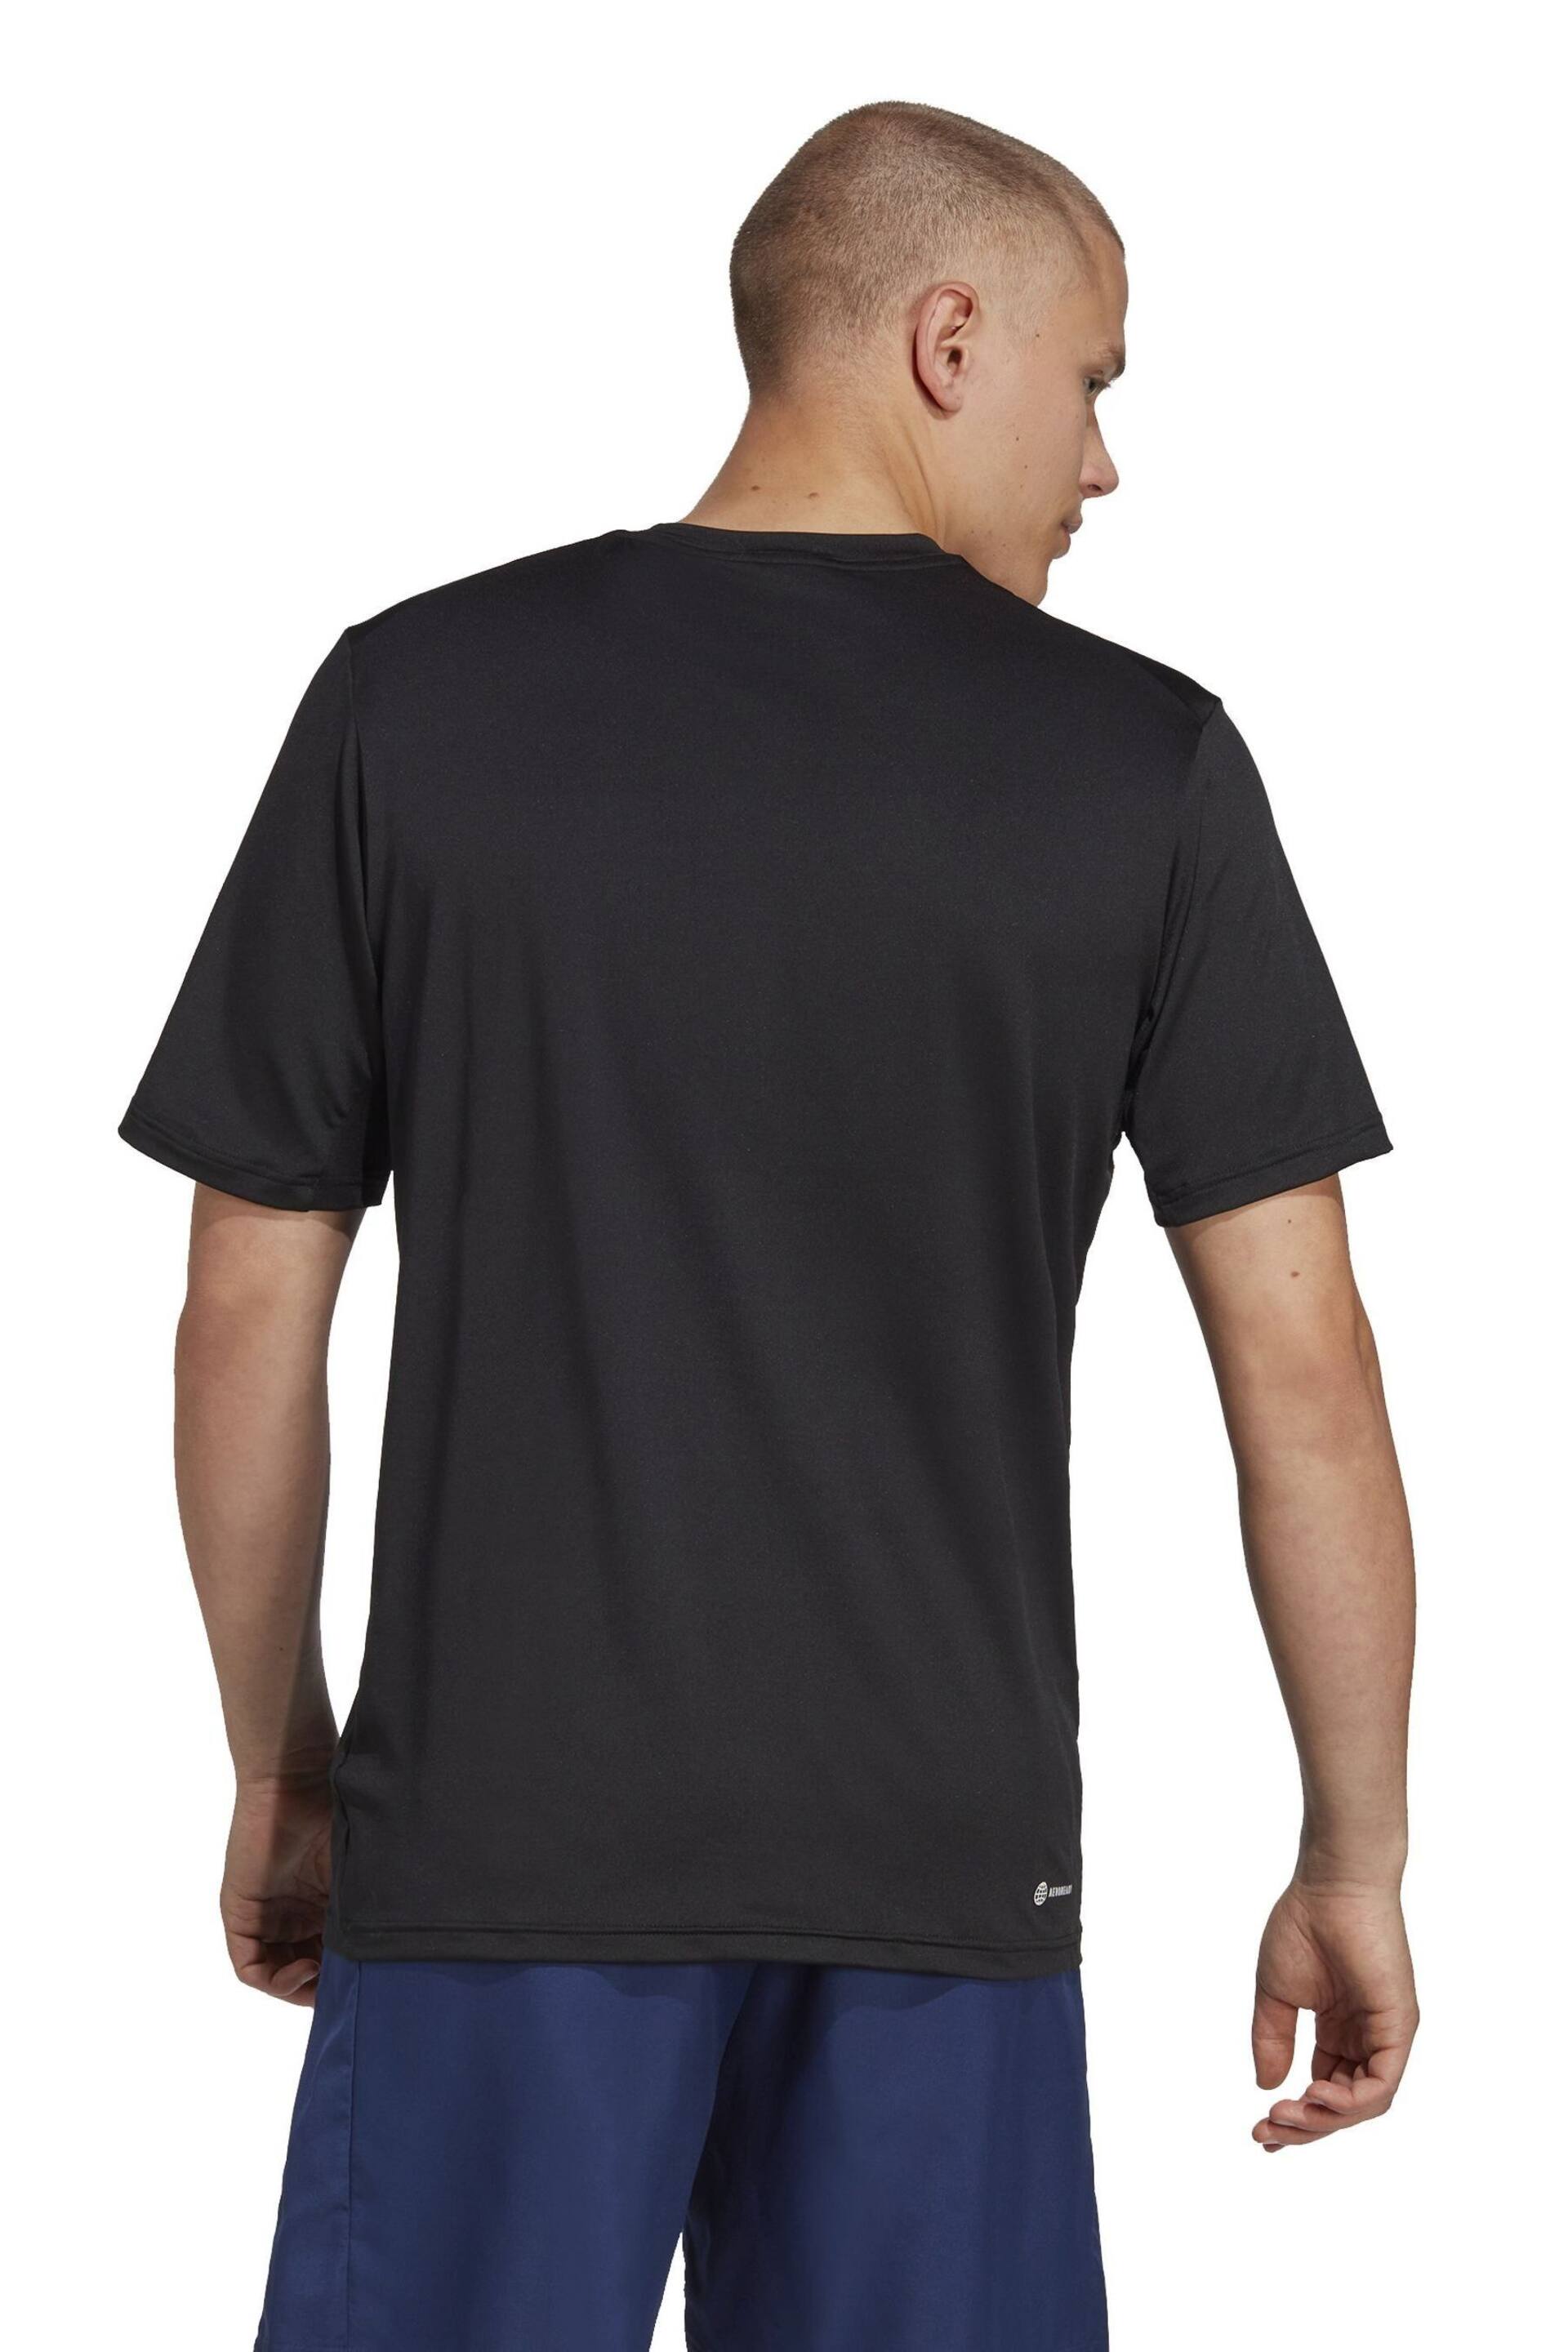 adidas Black Train Essentials Stretch Training T-Shirt - Image 2 of 4